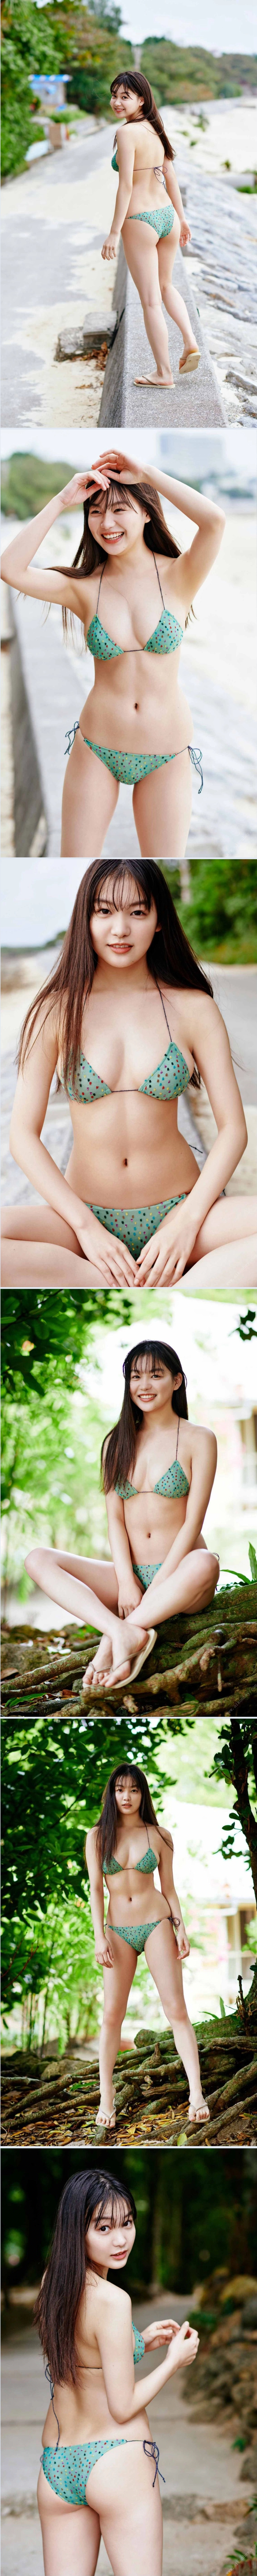 Haruna Yoshizawa, a gravure model born in 2002.